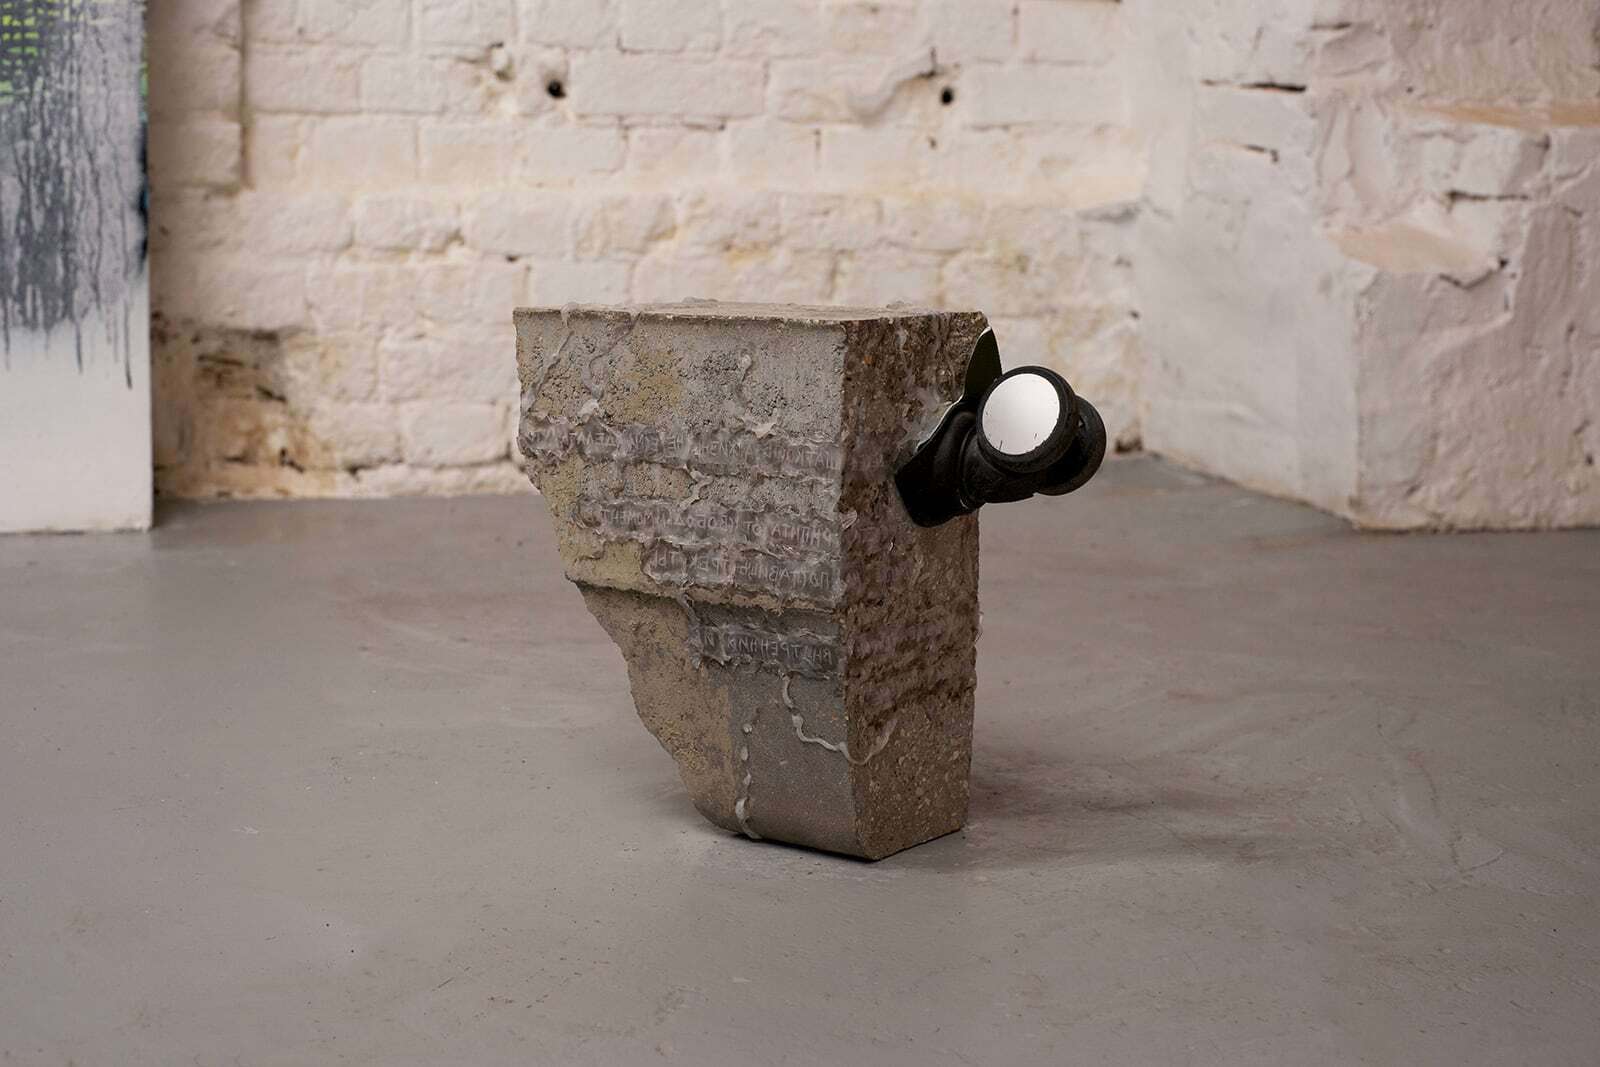 Daria Makarova, Il n'y a de cause que de ce qui cloche, 2020, concrete, building sealant, dust, wrapped poetic text, food-grade silicone, orthopaedic chair wheel